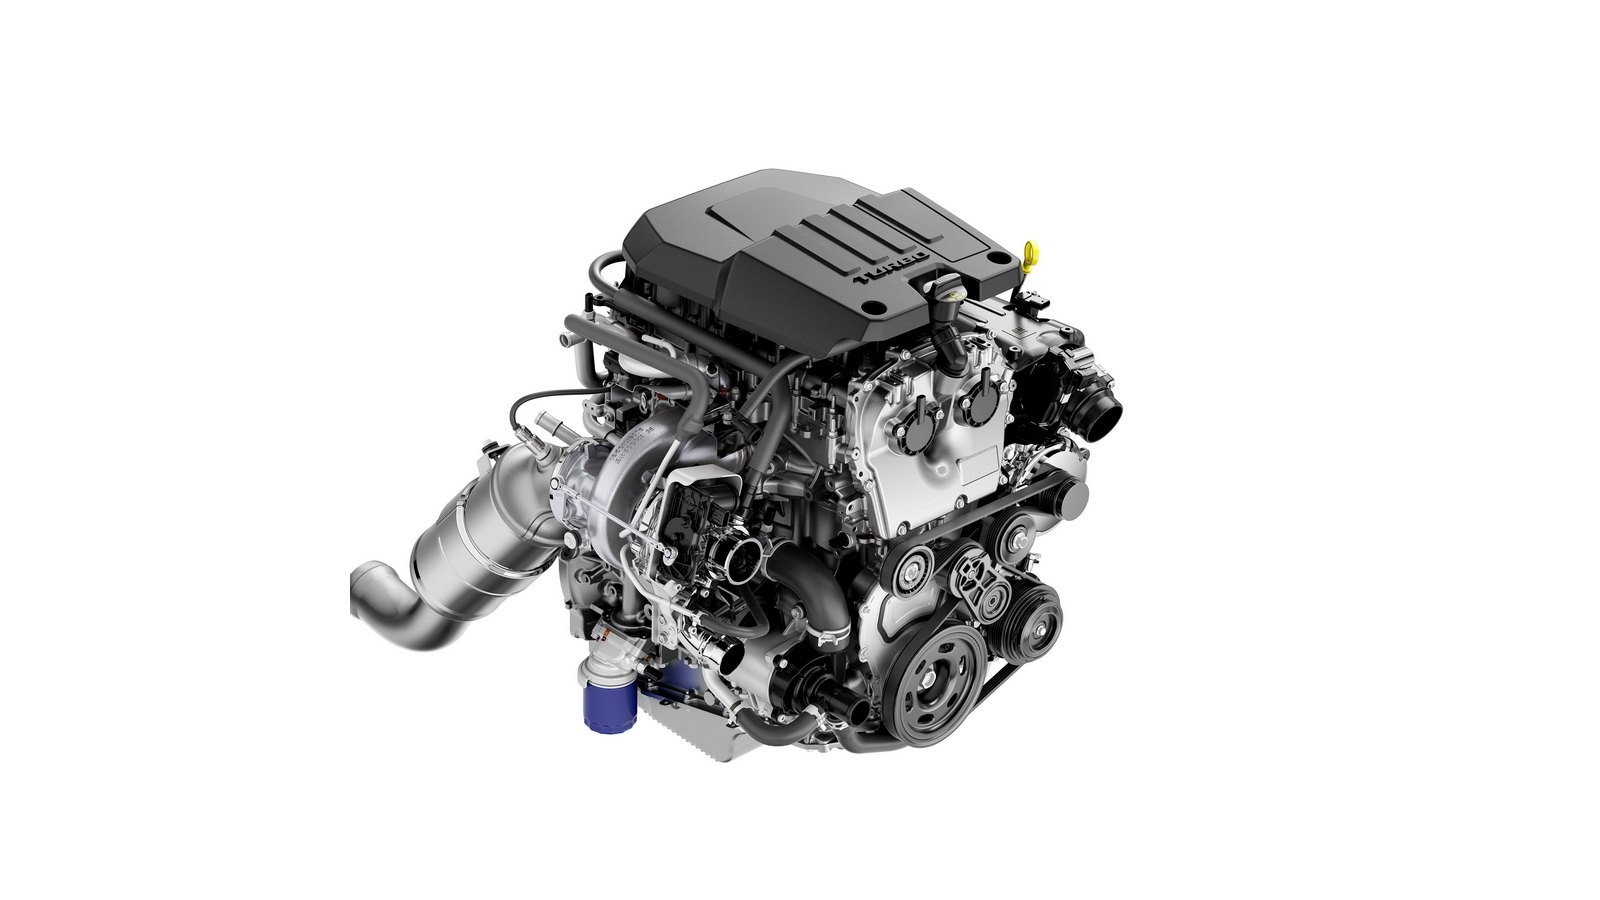 2.7L Turbo с системой Active Fuel Management и технологией stop/start